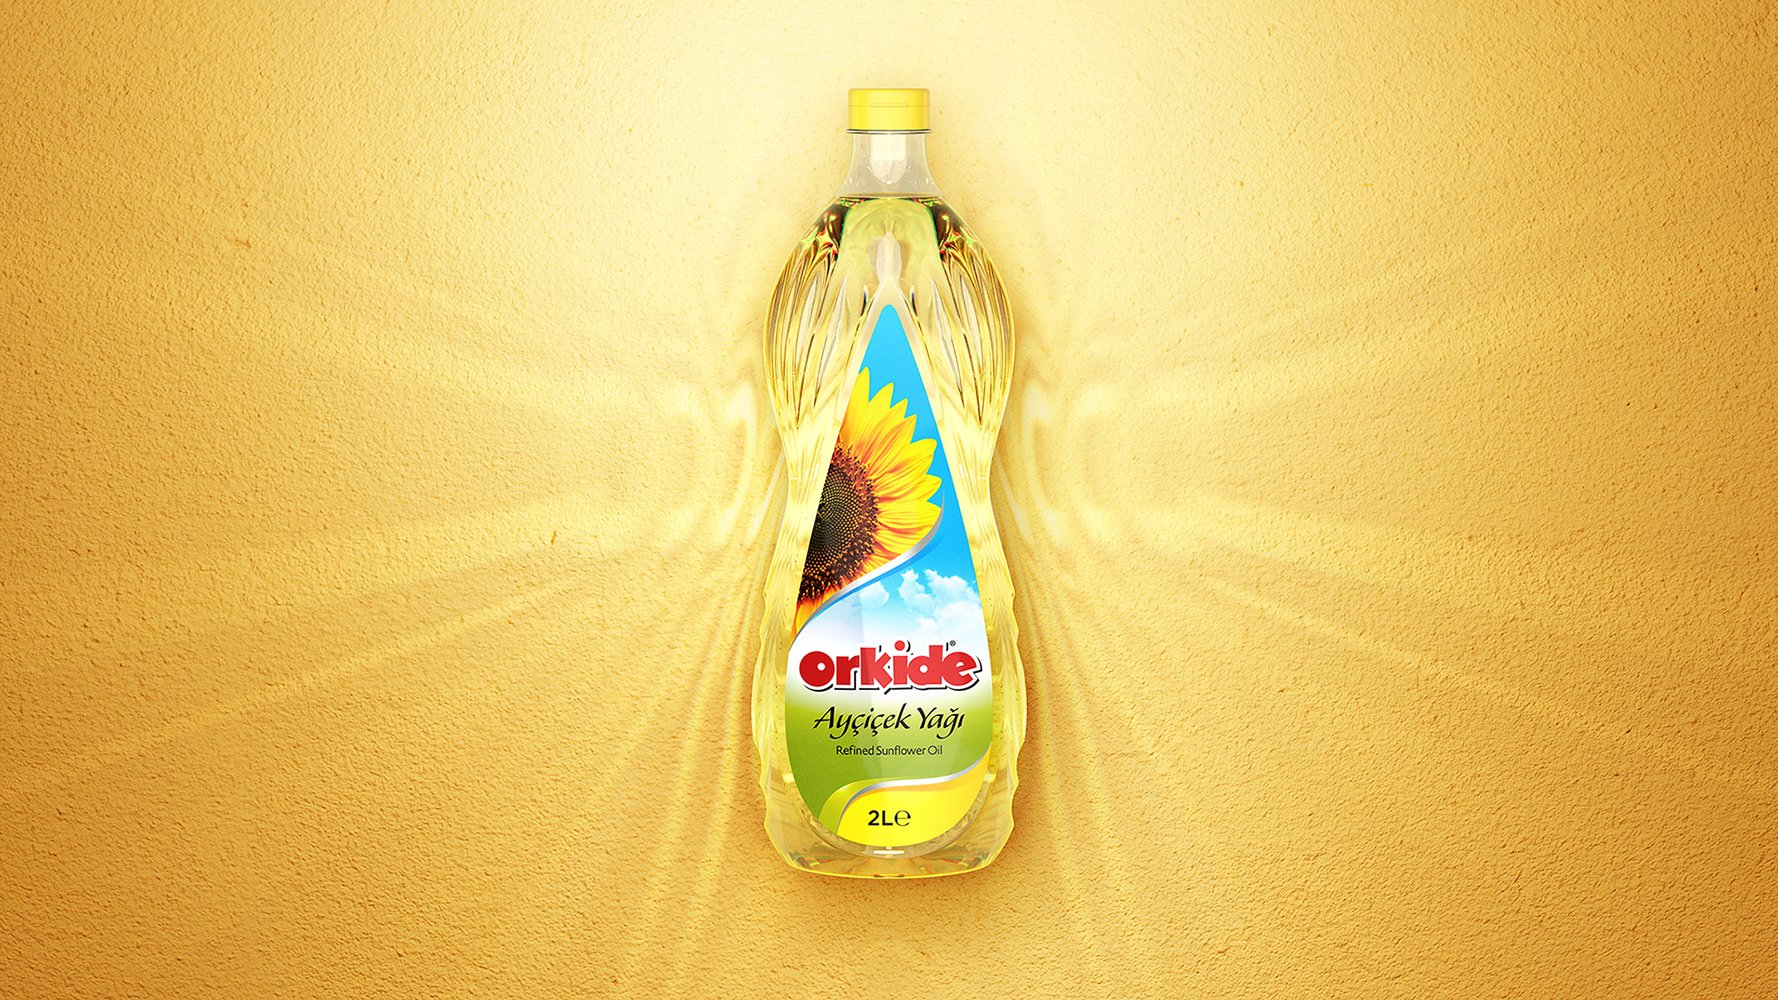 Orkide Sunflower Oil Packaging Industrial Design PET Bottle and Graphic Design